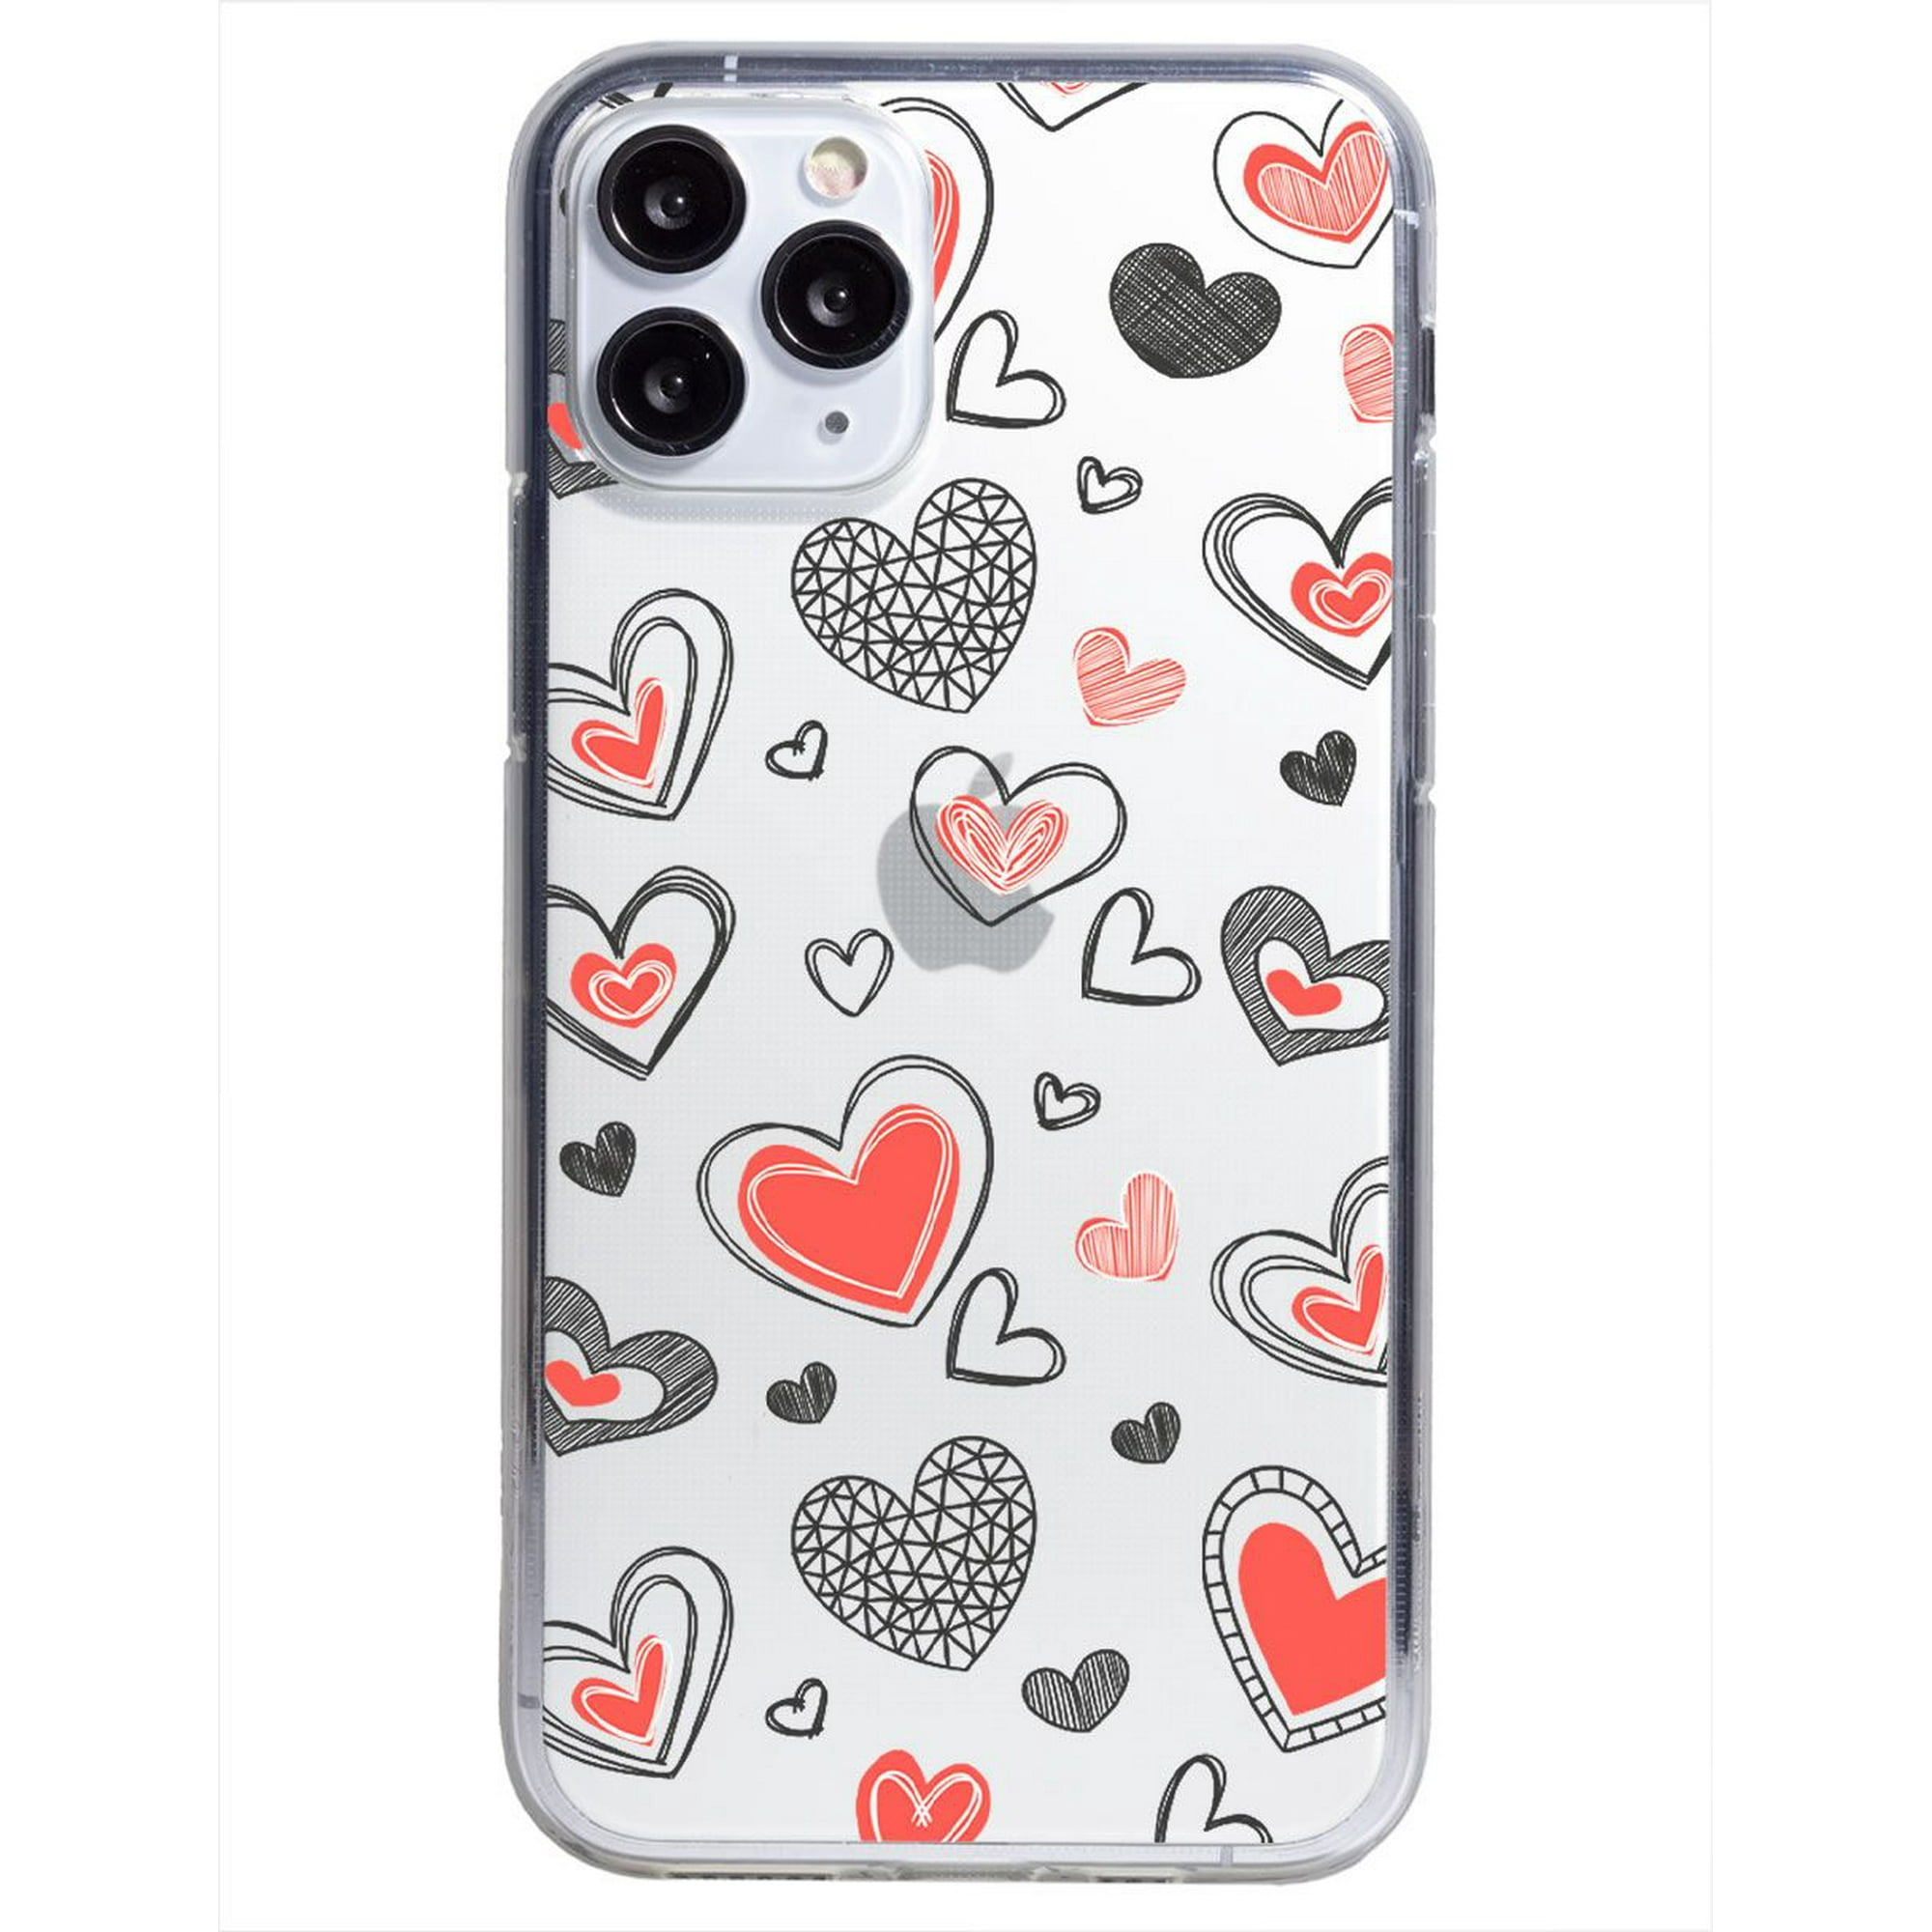 Funda para iphone 11 pro max corazones grafito, uso rudo, instacase protector para iphone 11 pro max antigolpes, case corazones grafito